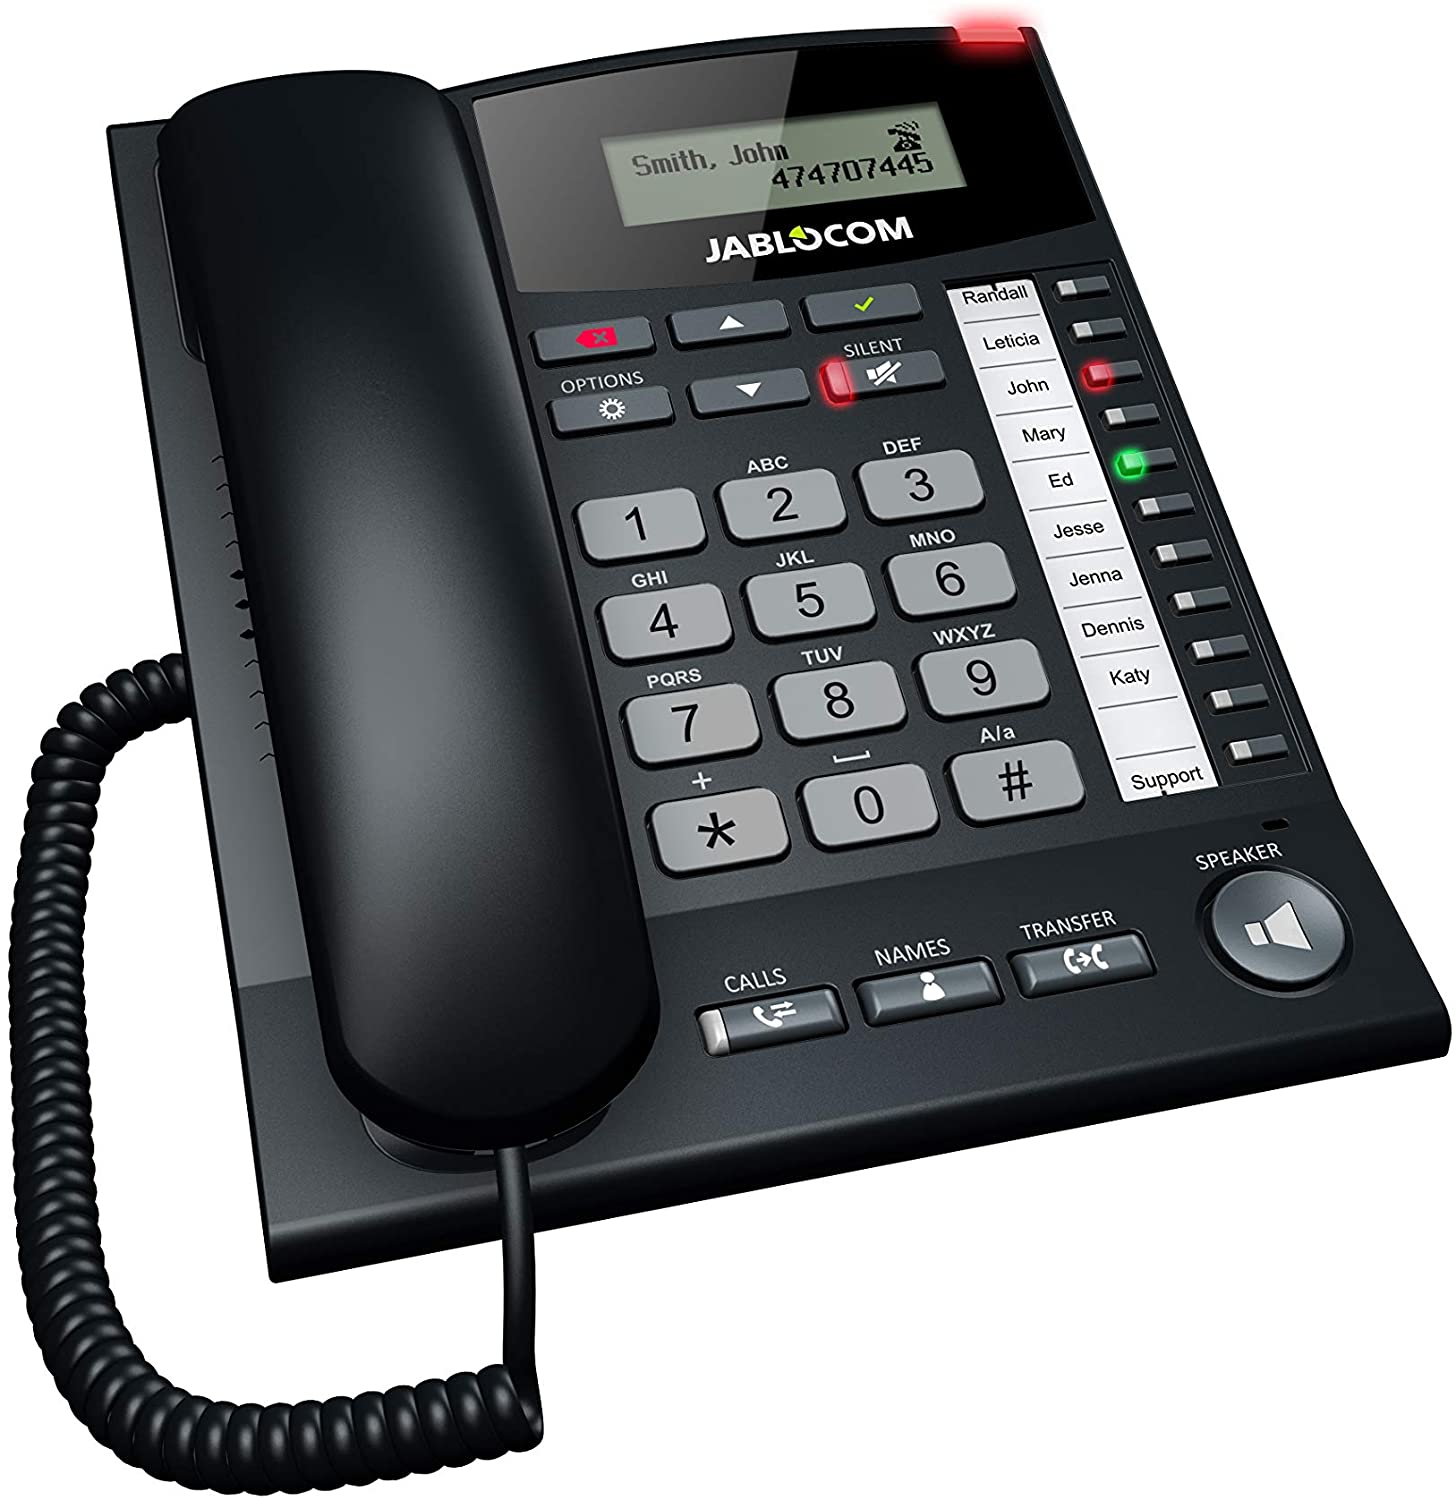 GDP-06e Telefoon